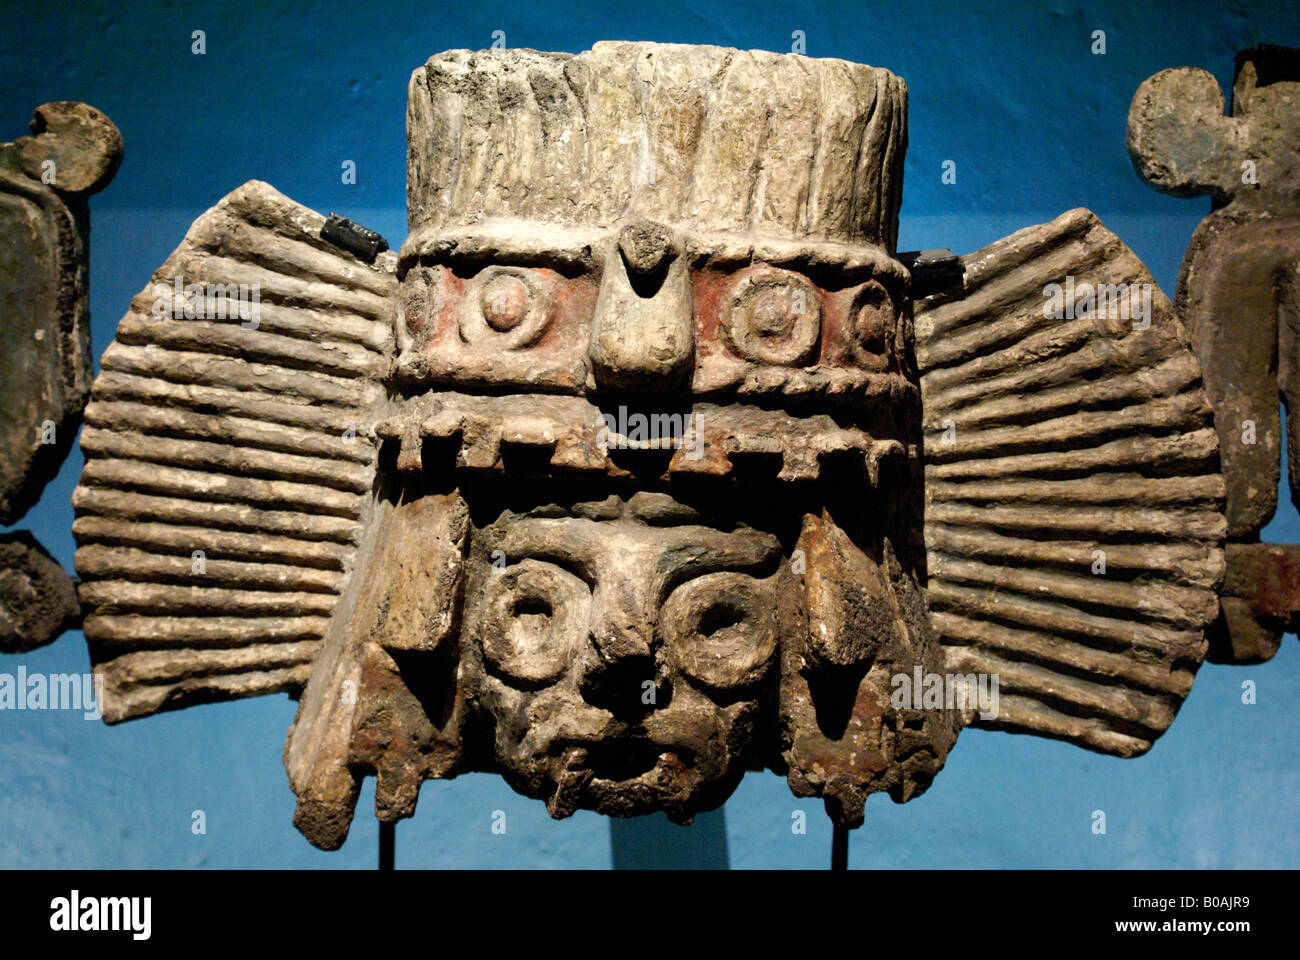 Brasero Tlaloc Aztec stone sculpture, Museo del Templo Mayor, Mexico City Stock Photo